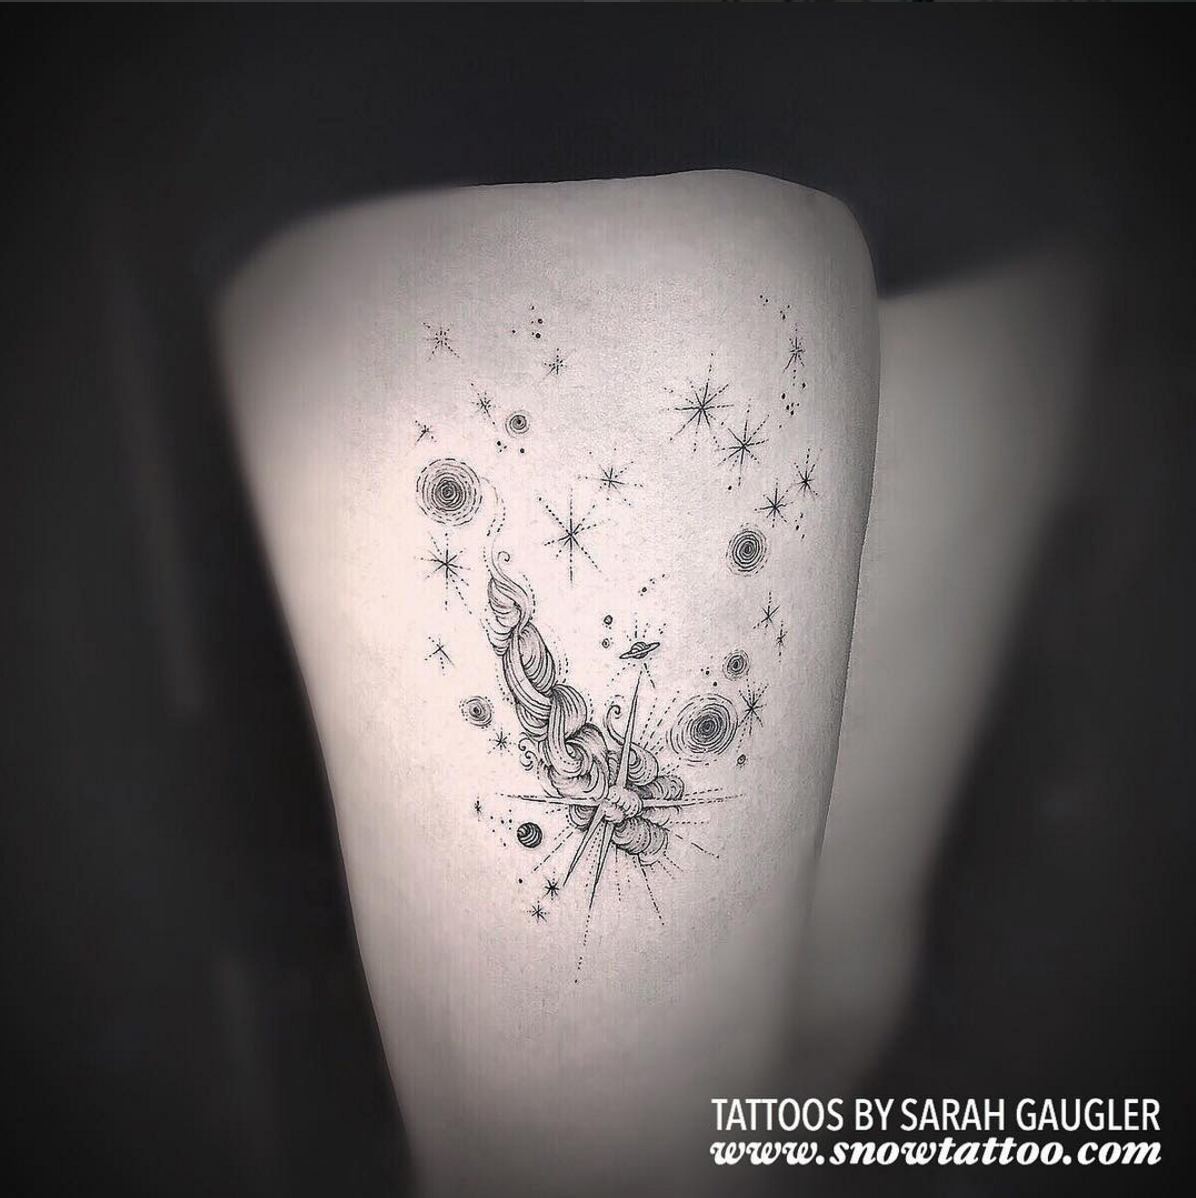 Sarah Gaugler Snow Tattoo Custom Cosmos Galaxy Shooting Star Commet Detailed Intricate New York Best Tattoos Best Tattoo Artist NYC.png